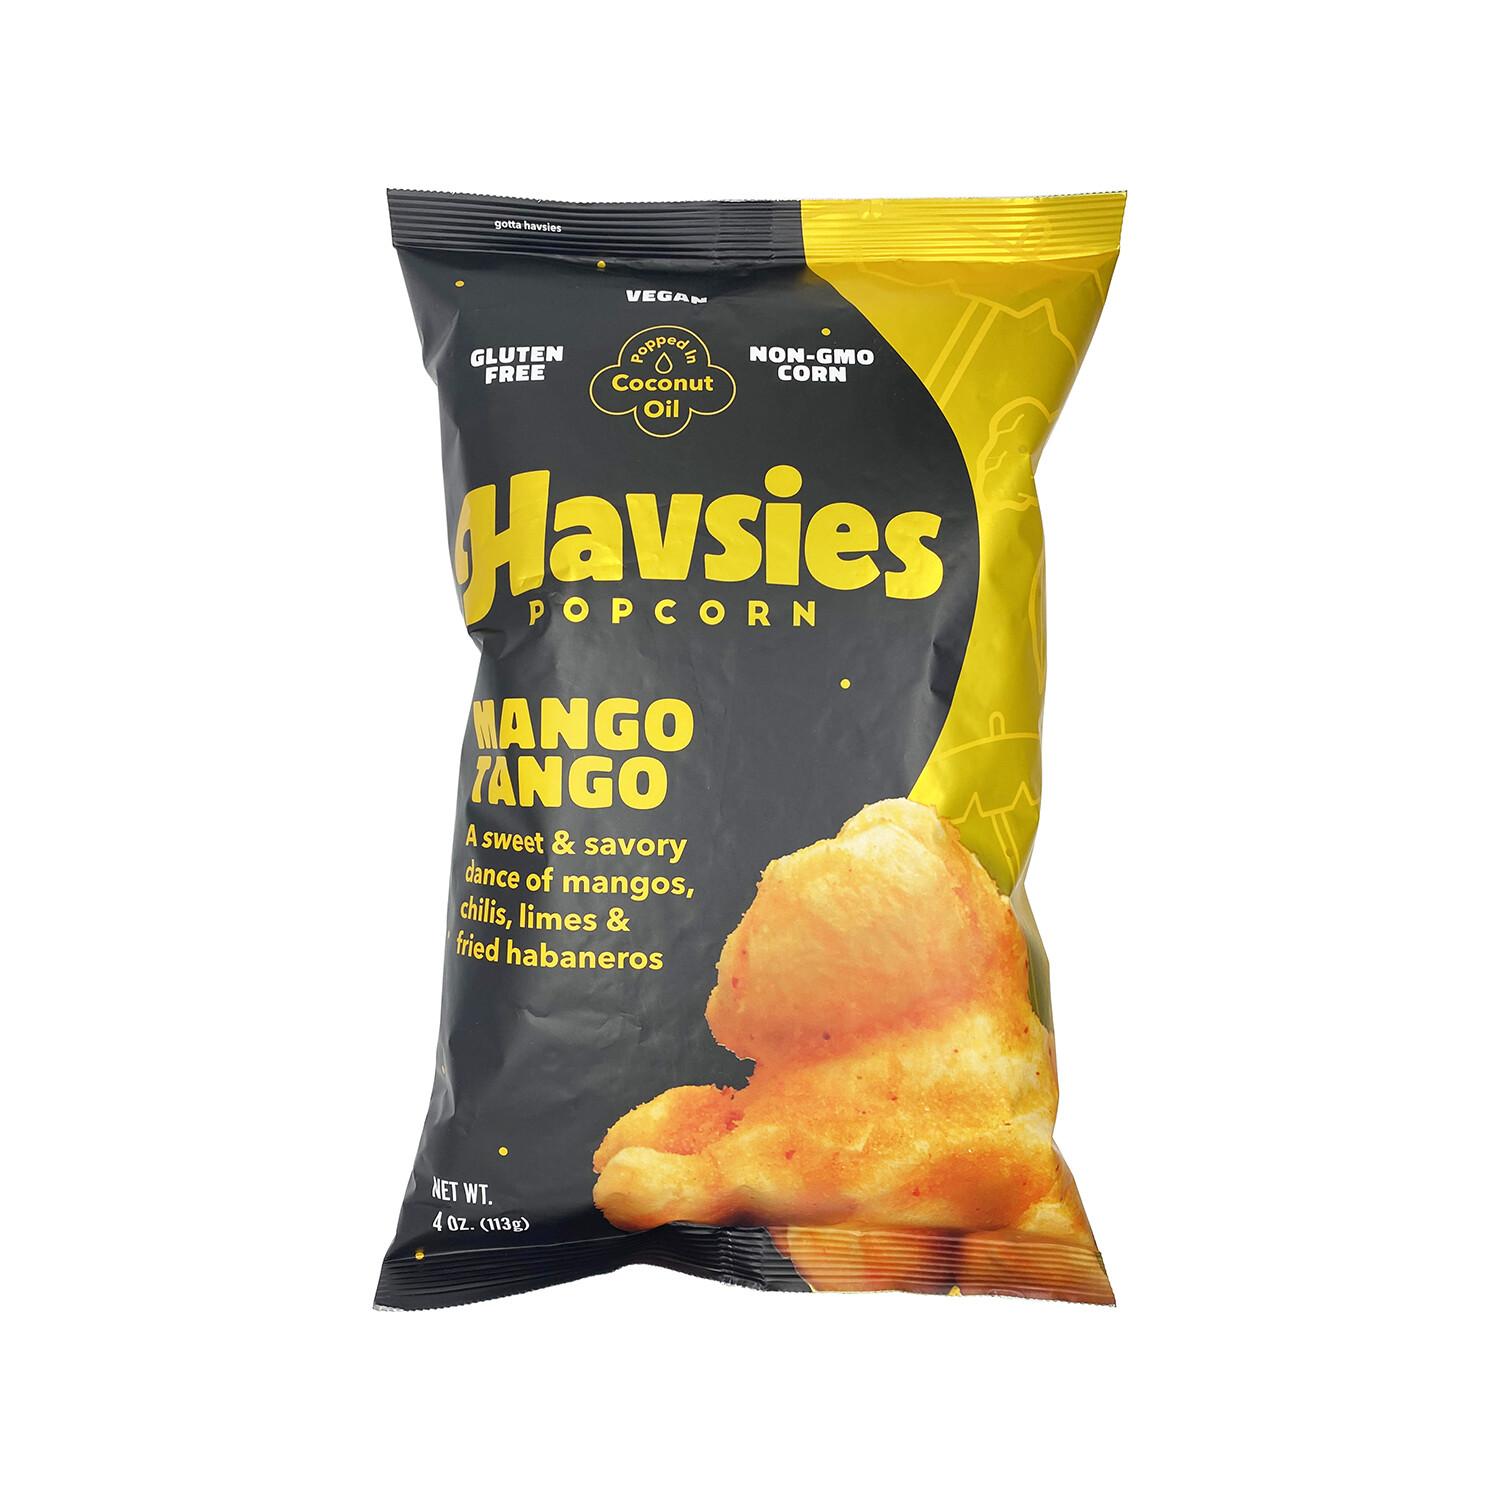 Havsies Popcorn Mango Tango 4oz